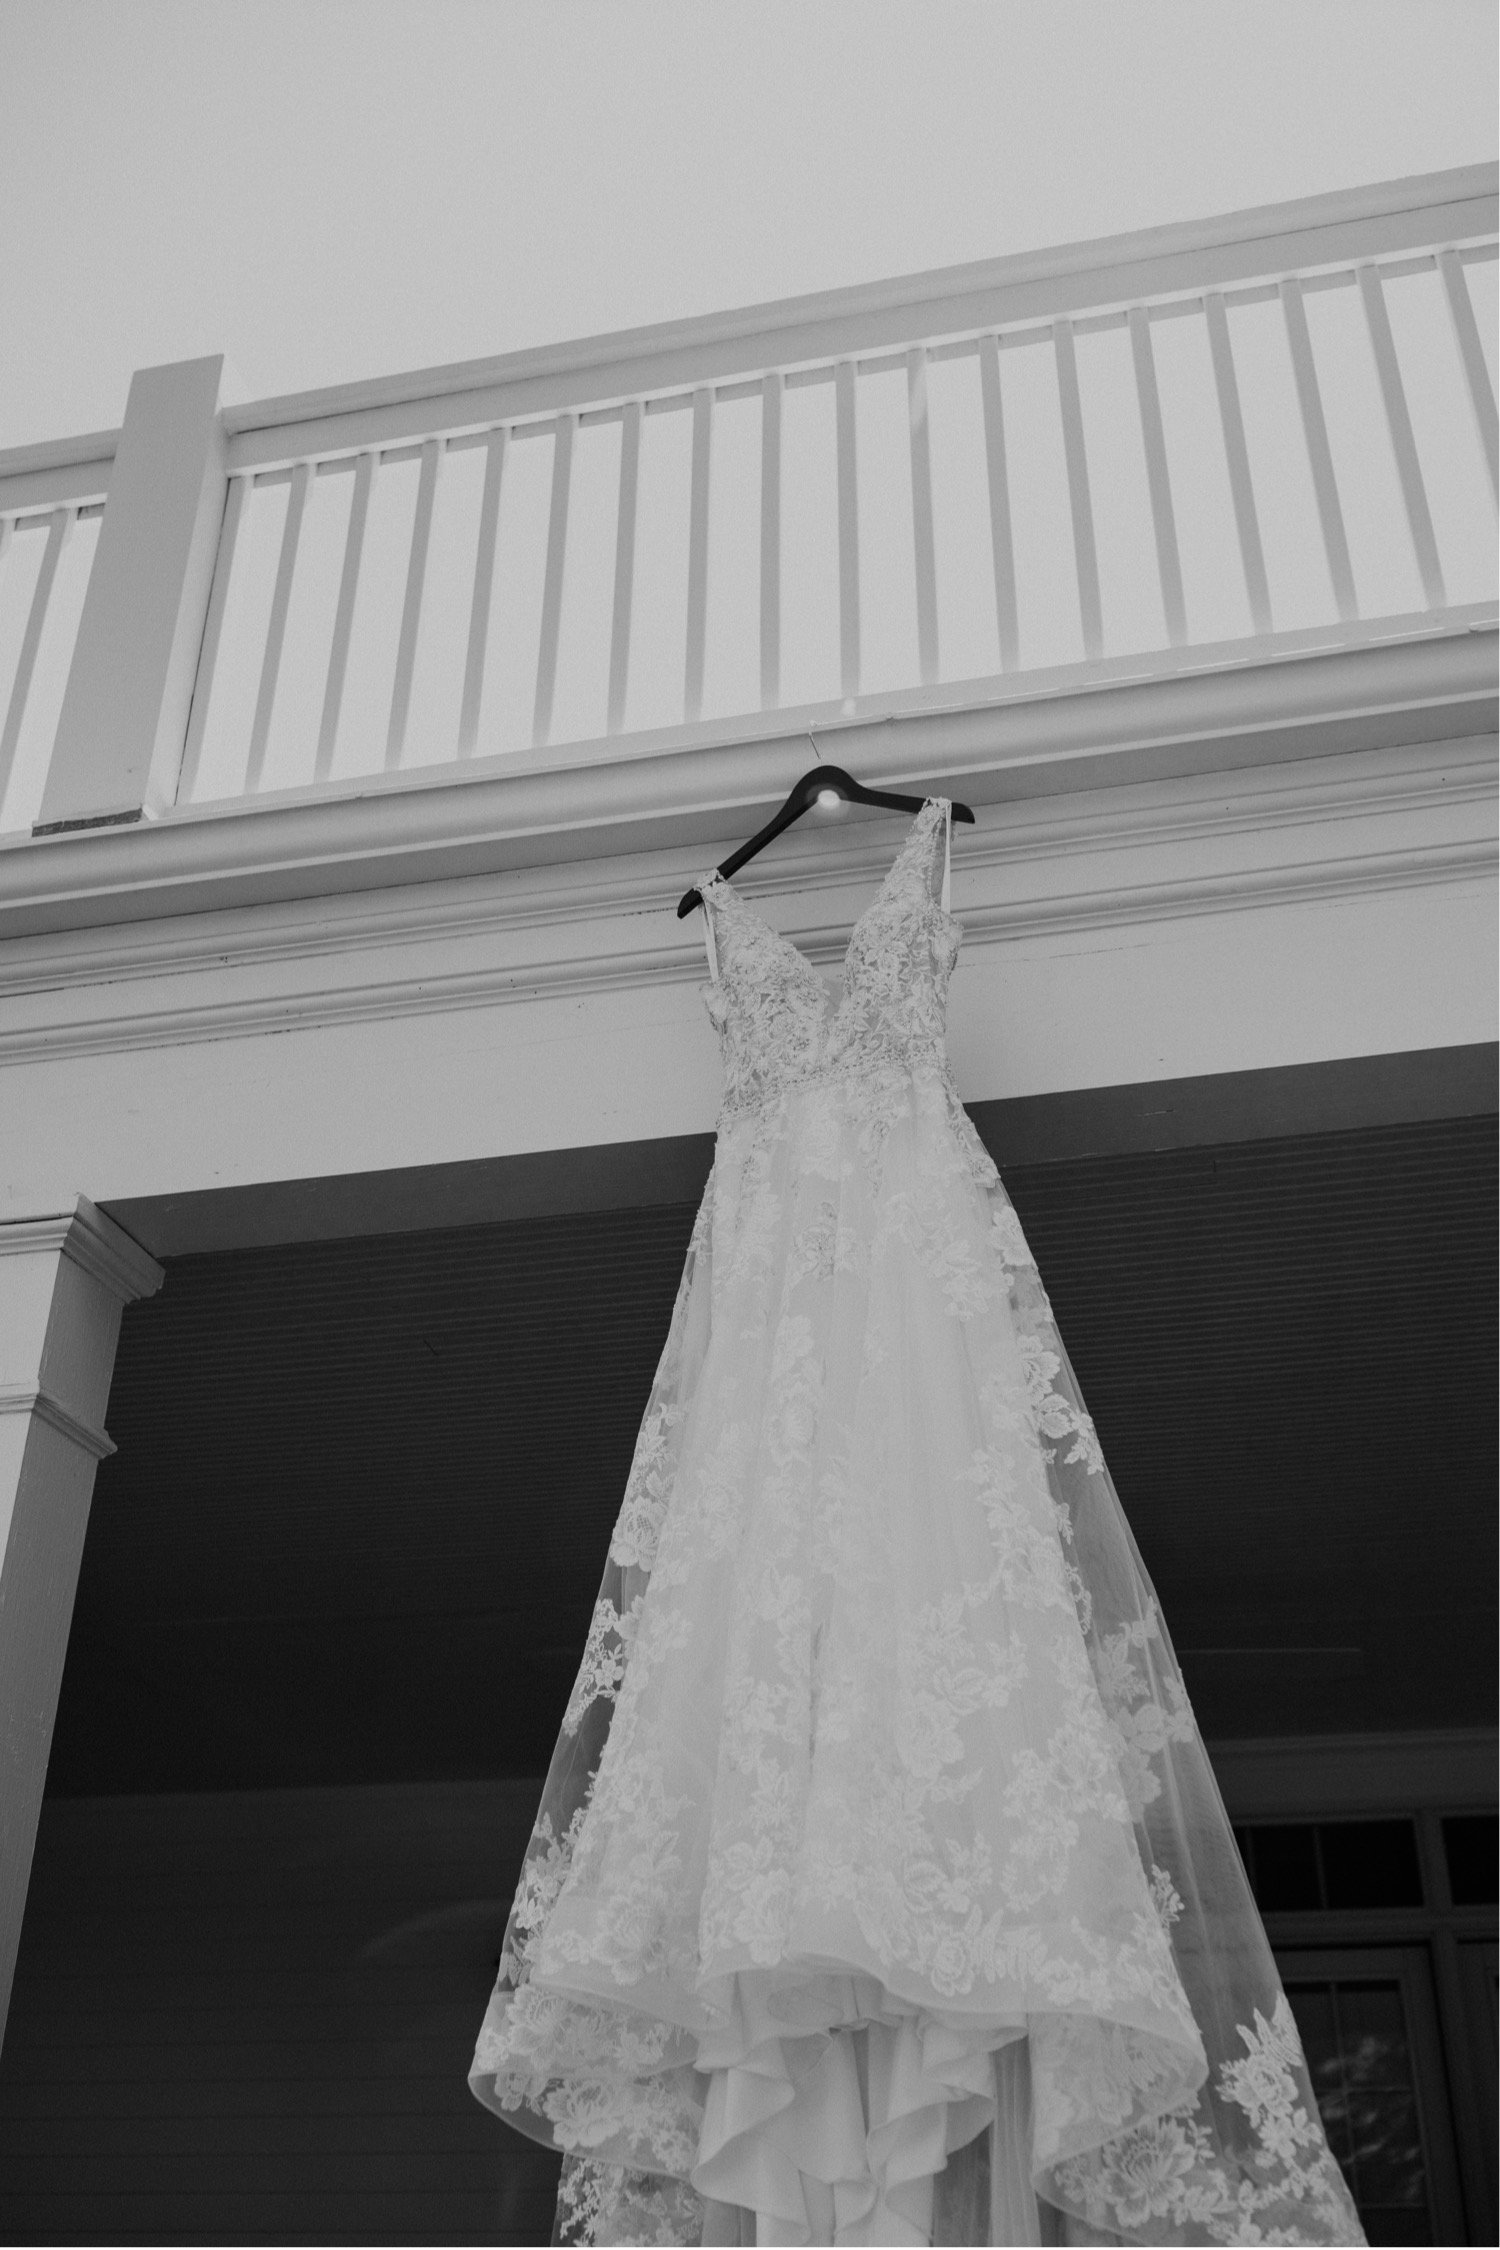 003_Alyssa&Vince-22-2_Hawthorne-house-kansas-city-wedding-photography-missouri-parkville-kelsey-diane-spring-bride-groom.jpg